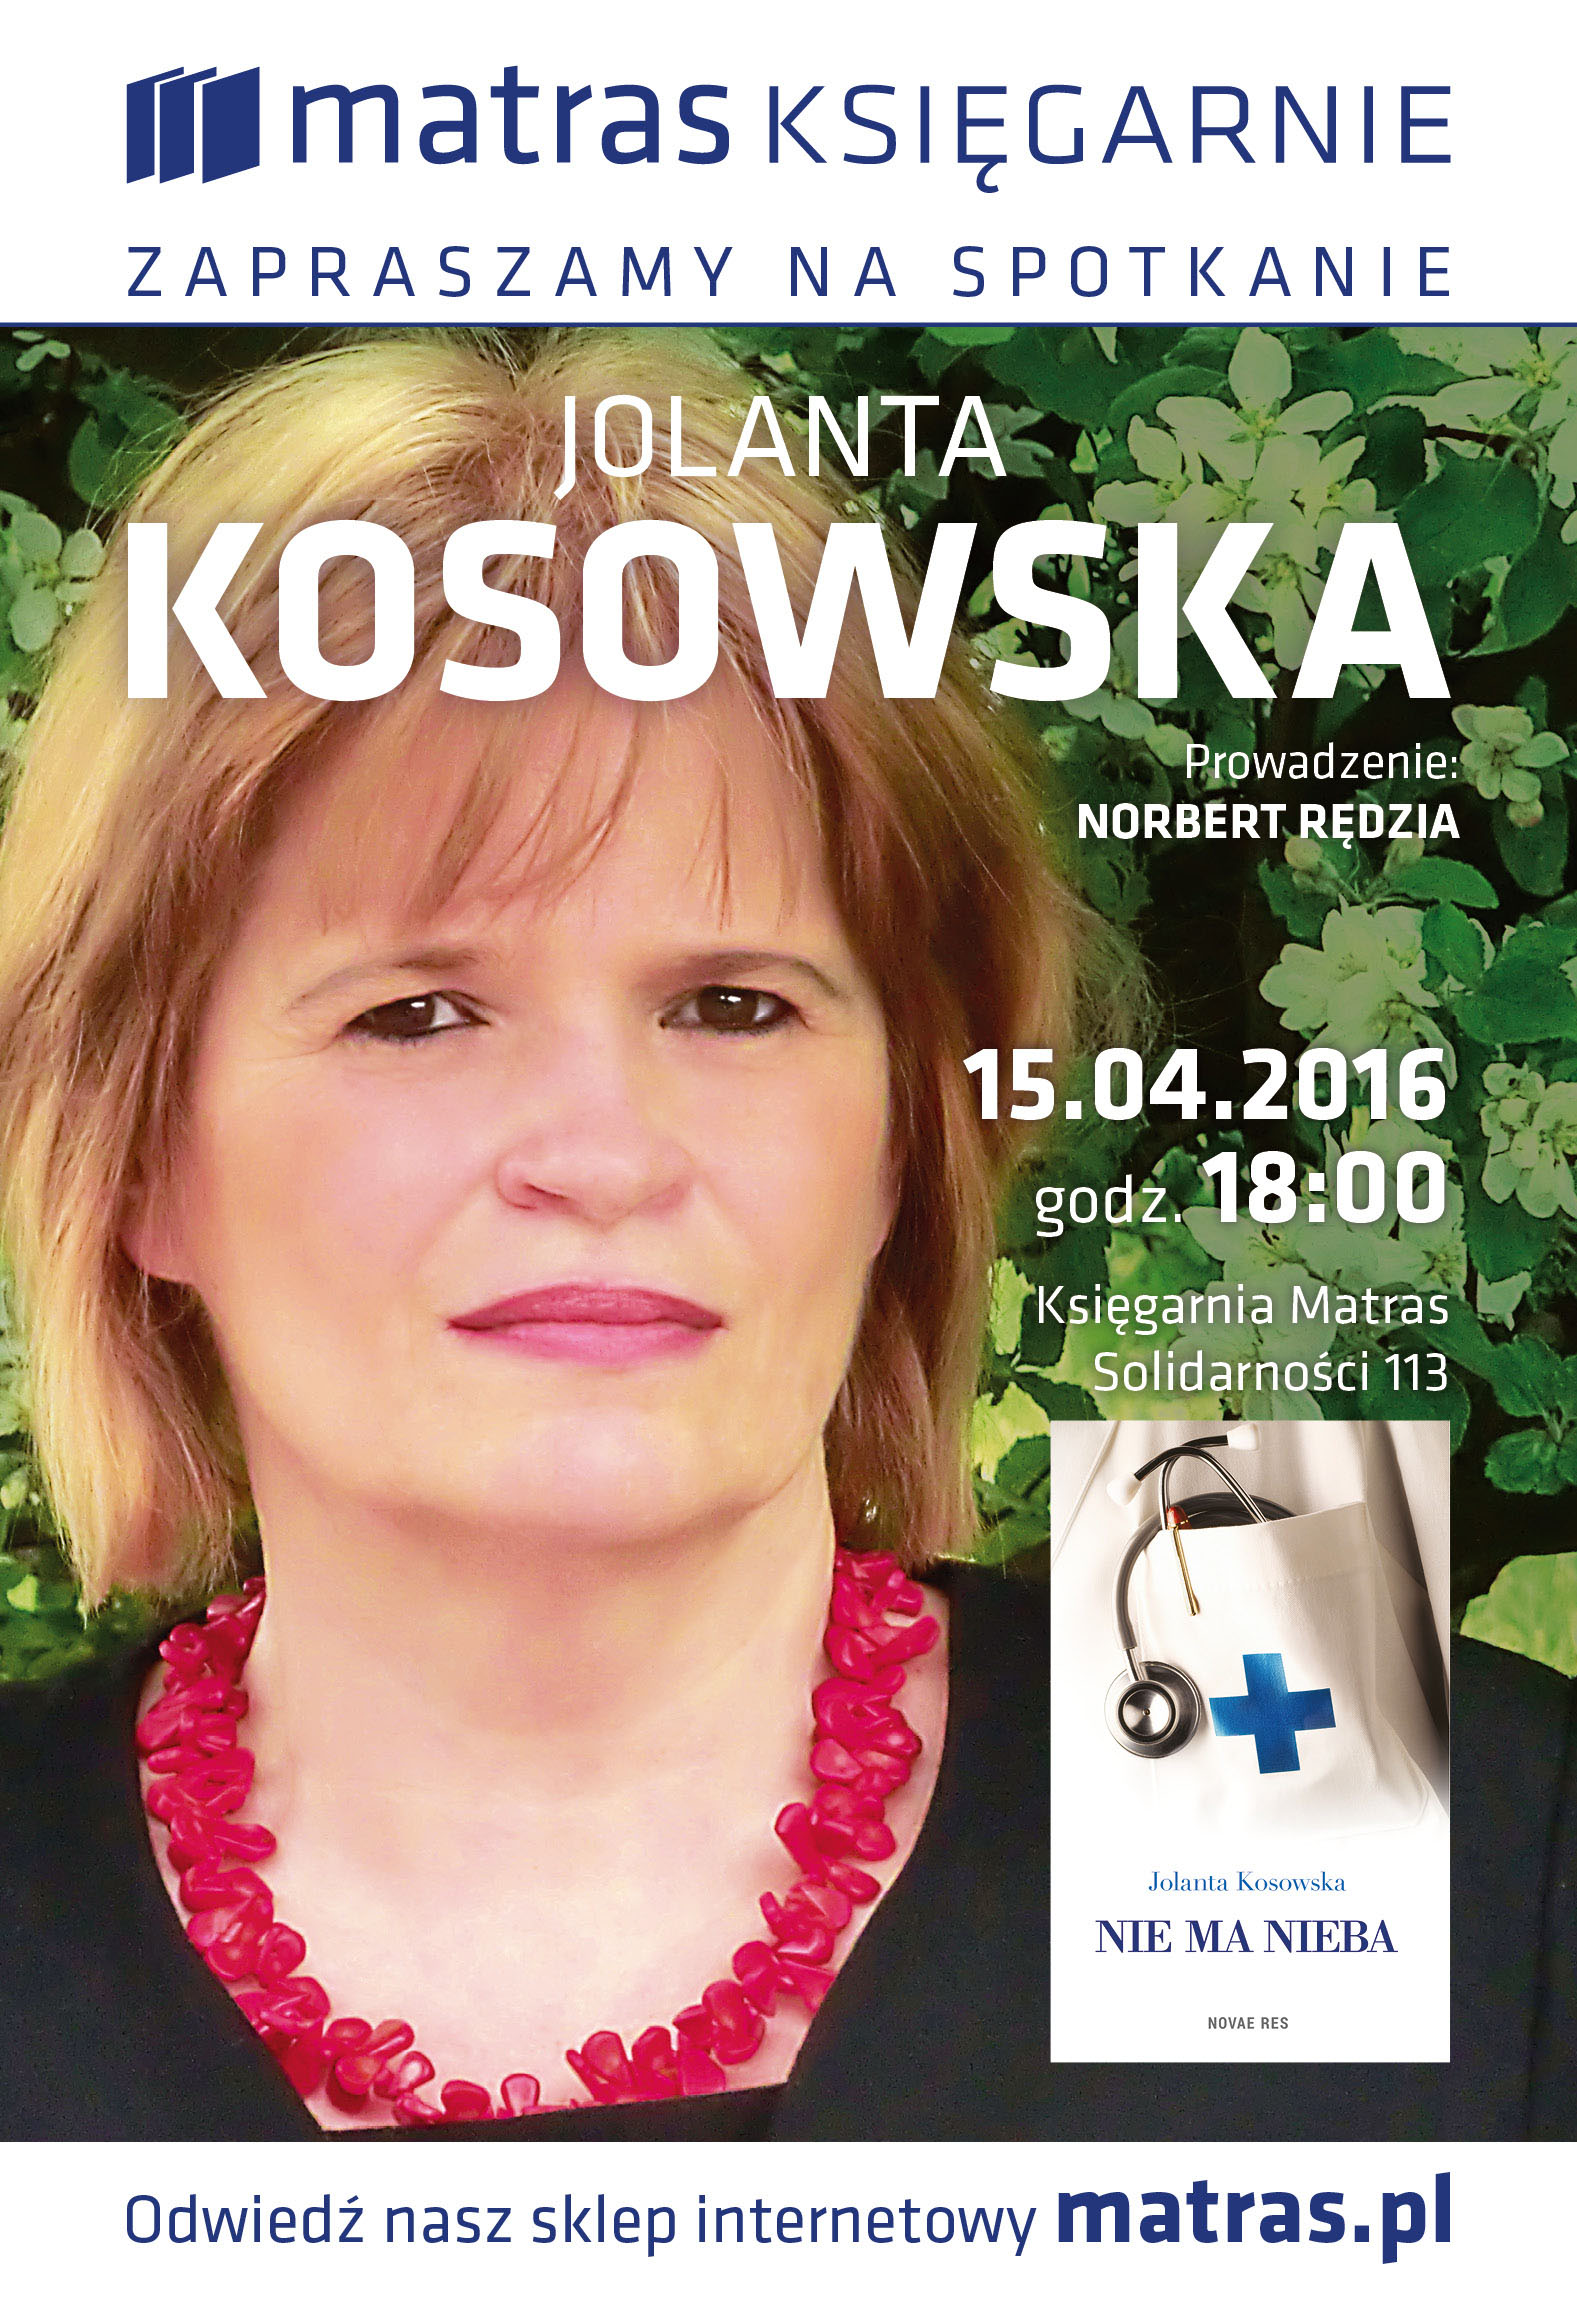 matras_spotkanie_jolanta kosowska_2016_WARS_plakat_A3_v1